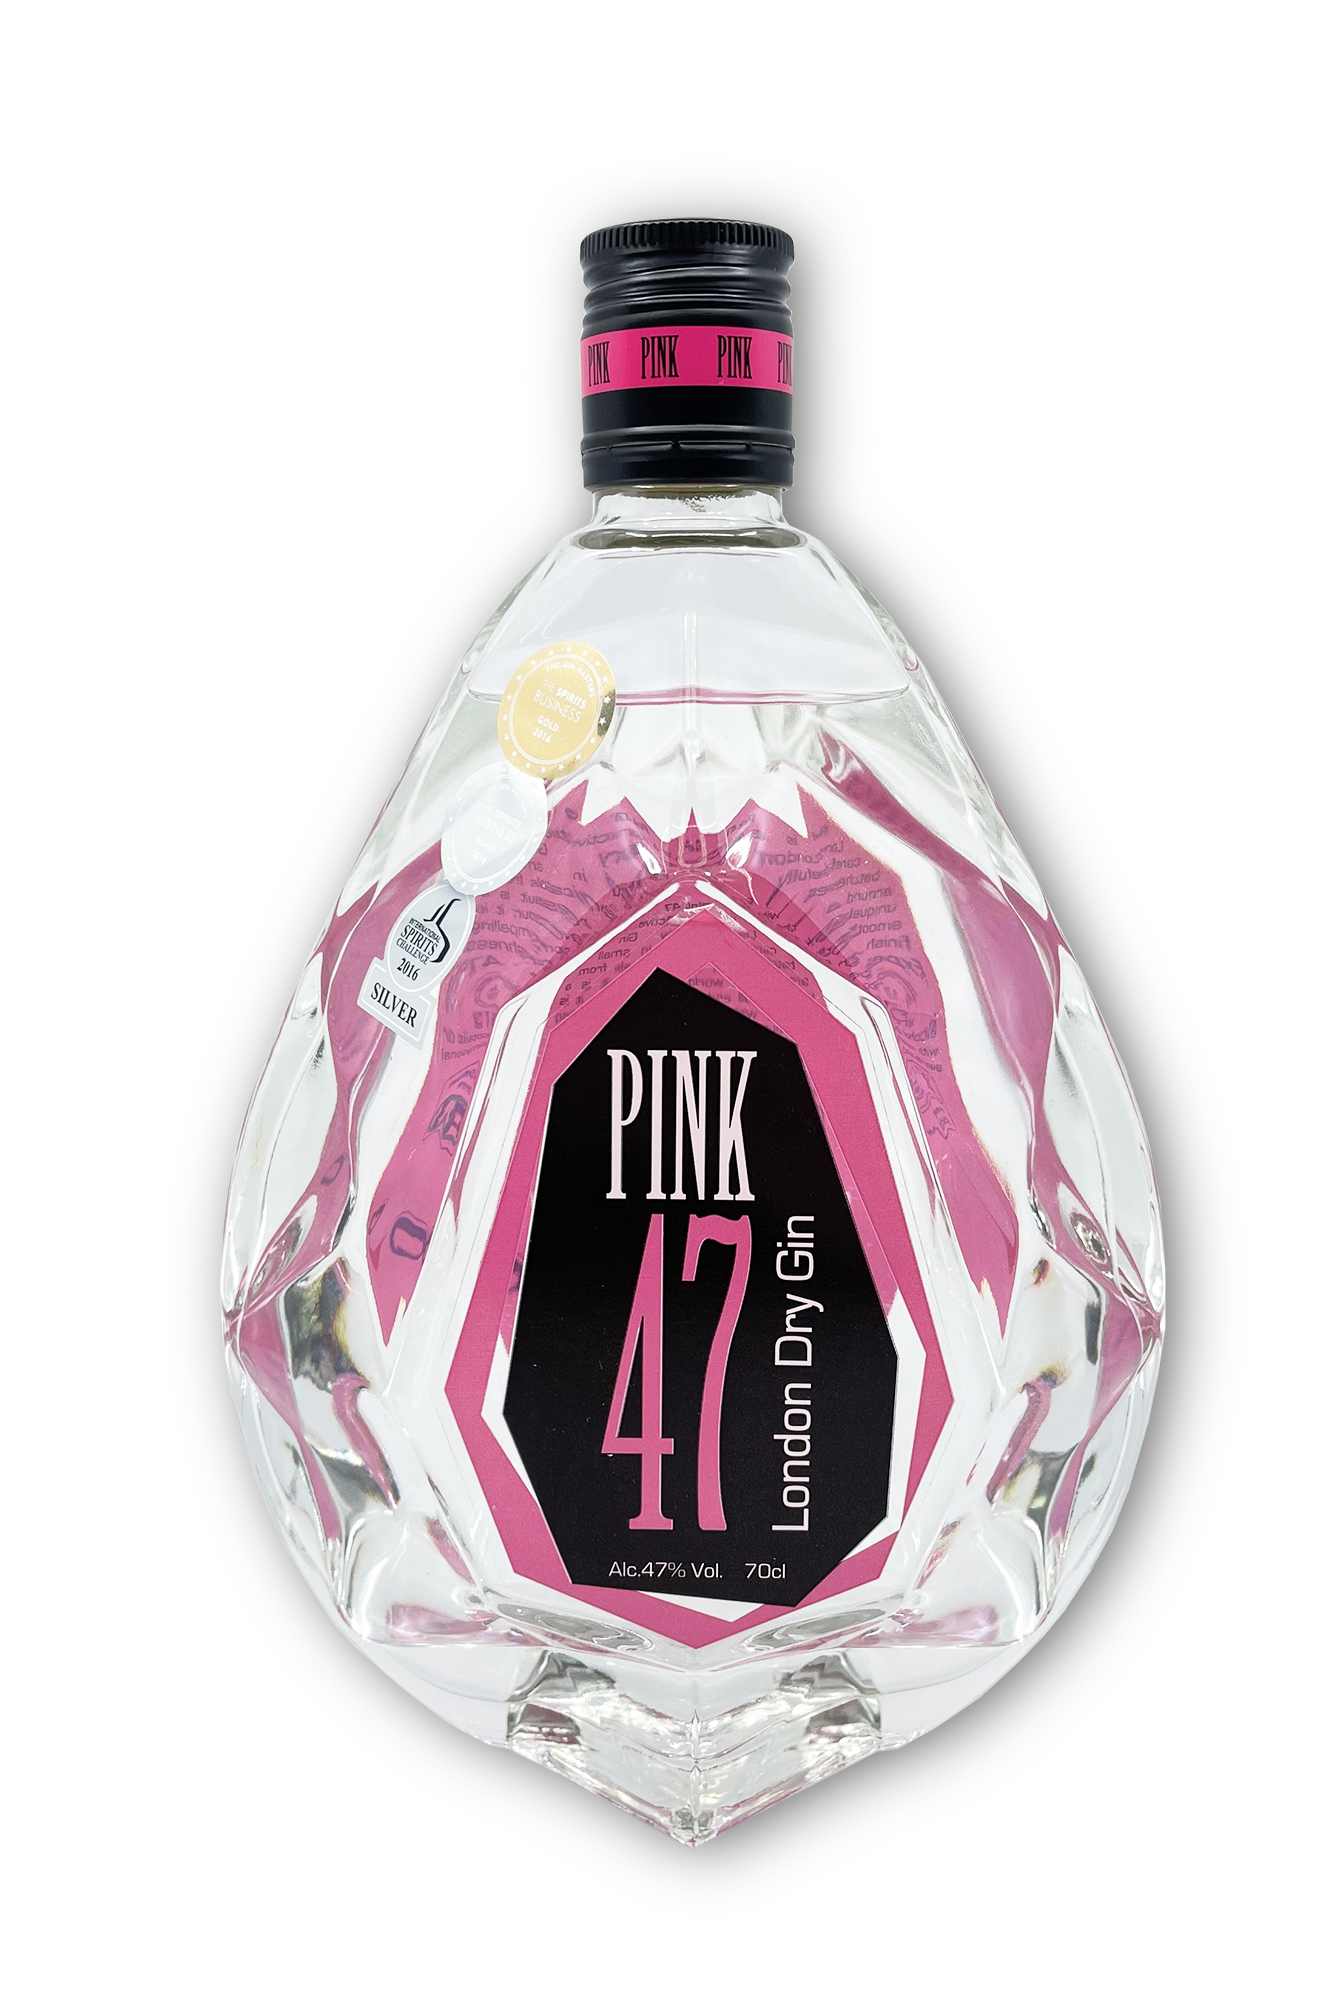 Pink47 London Dry Gin 0,7l 47%vol.